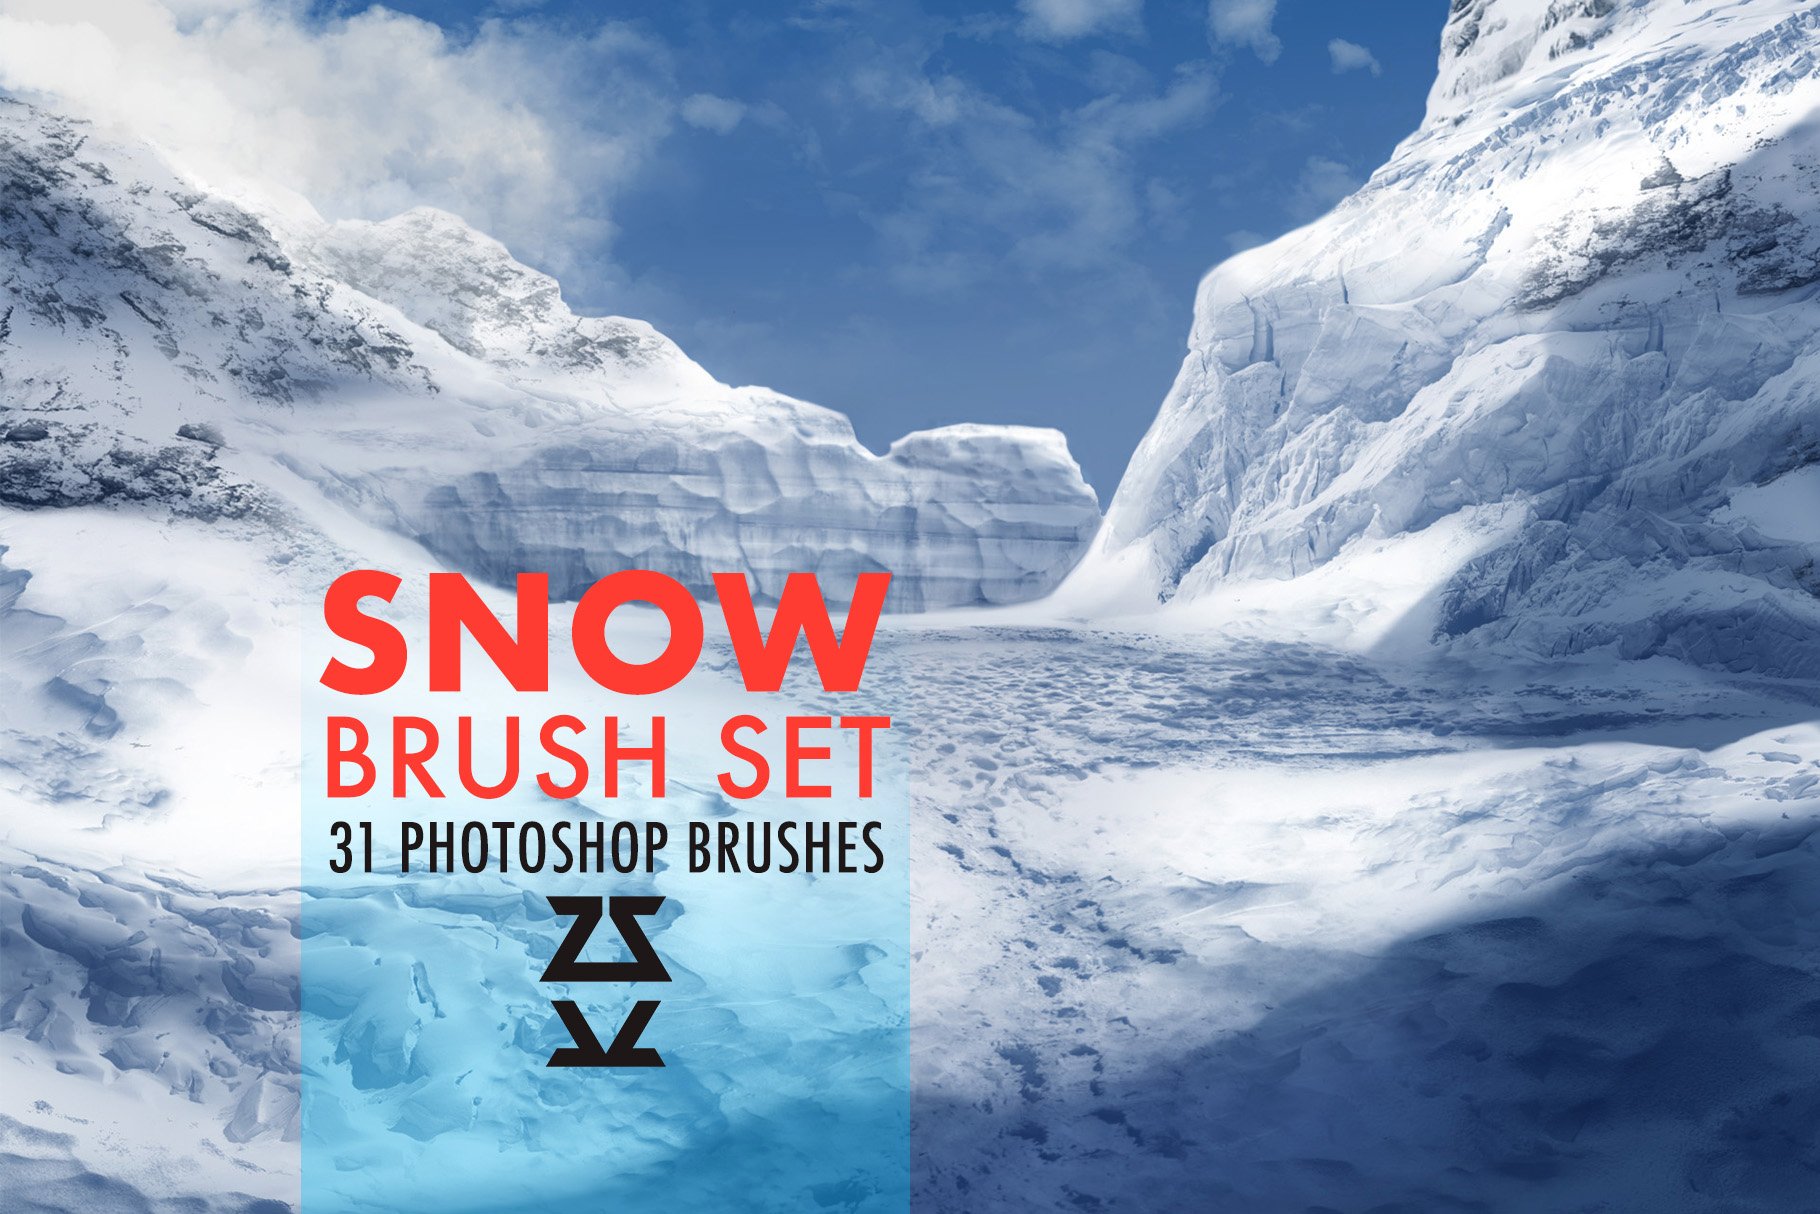 Snow Brush Setcover image.